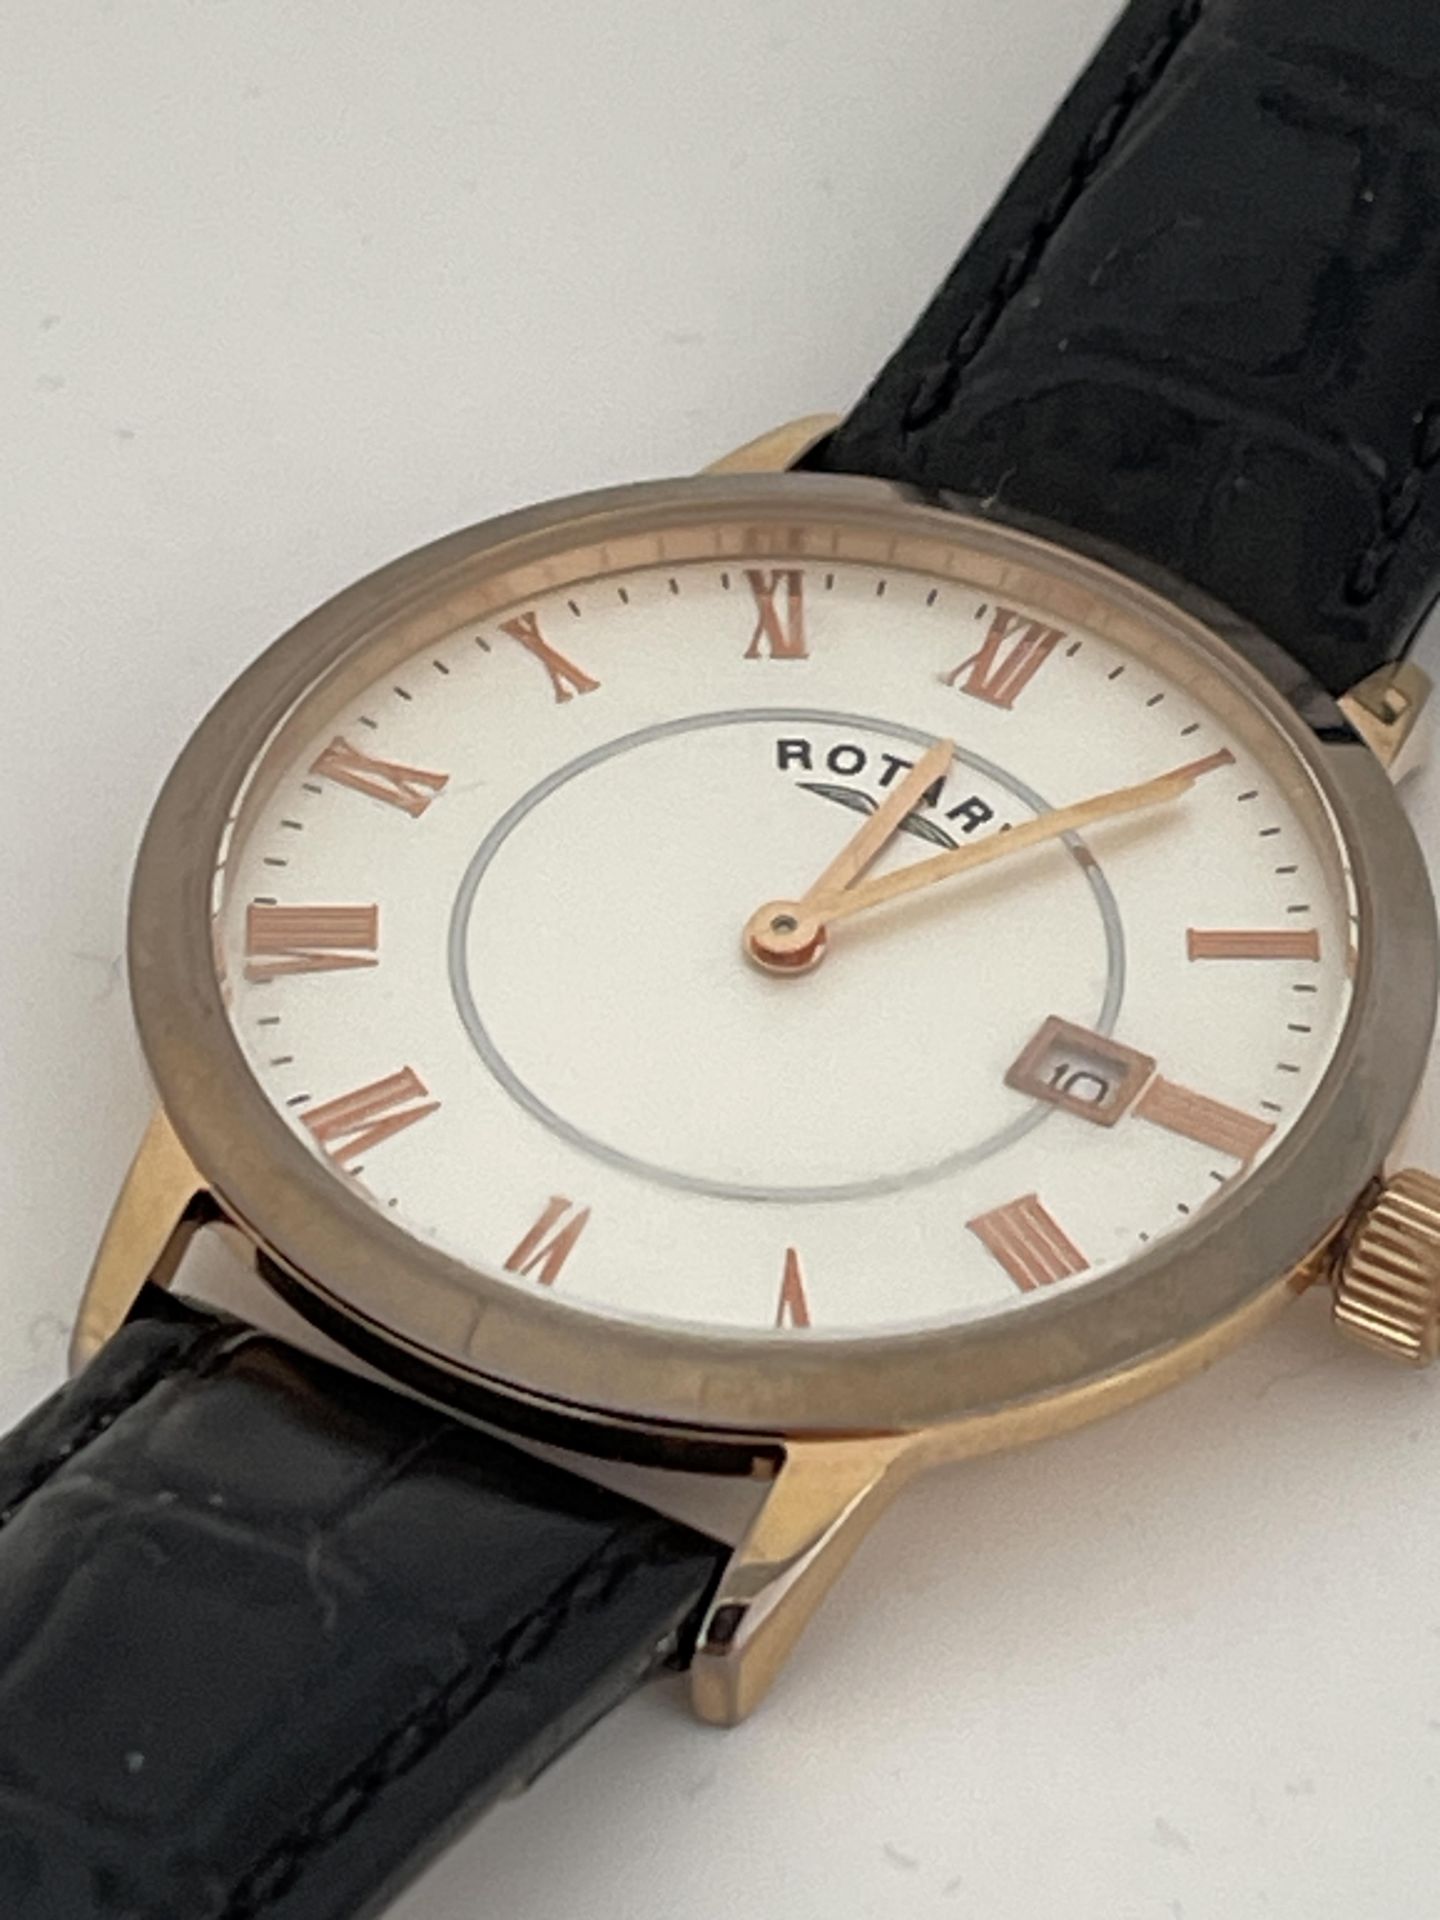 Rotary men's slim quartz watch - Image 8 of 9